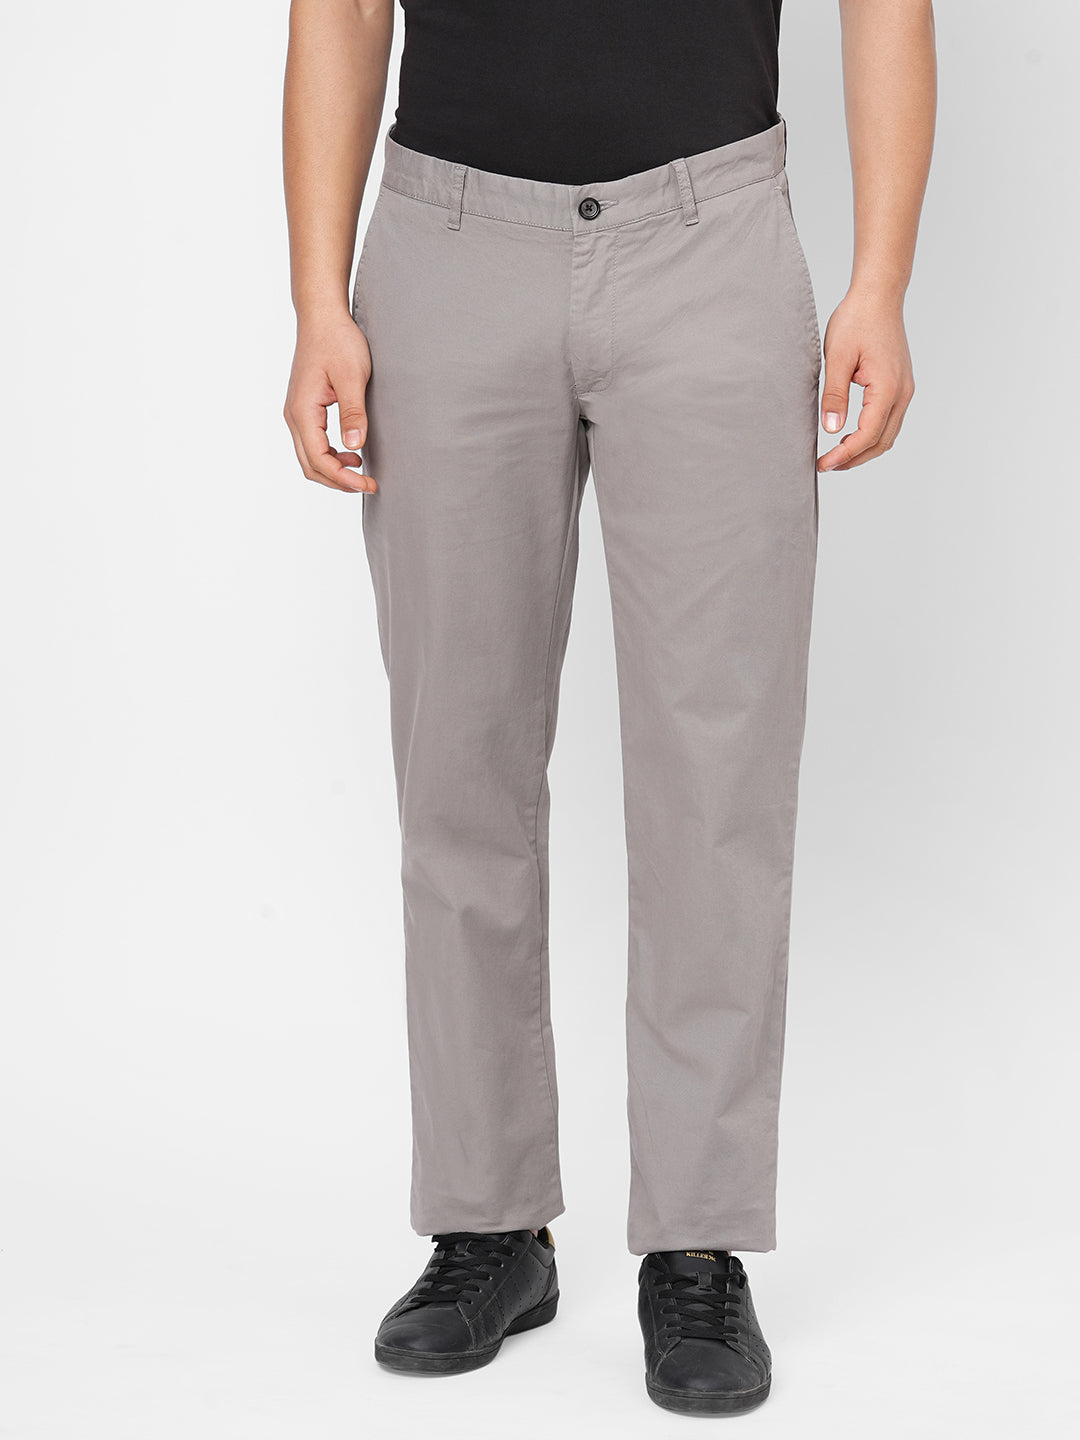 Buy Men's Cotton Lycra Casual Wear Regular Fit Pants